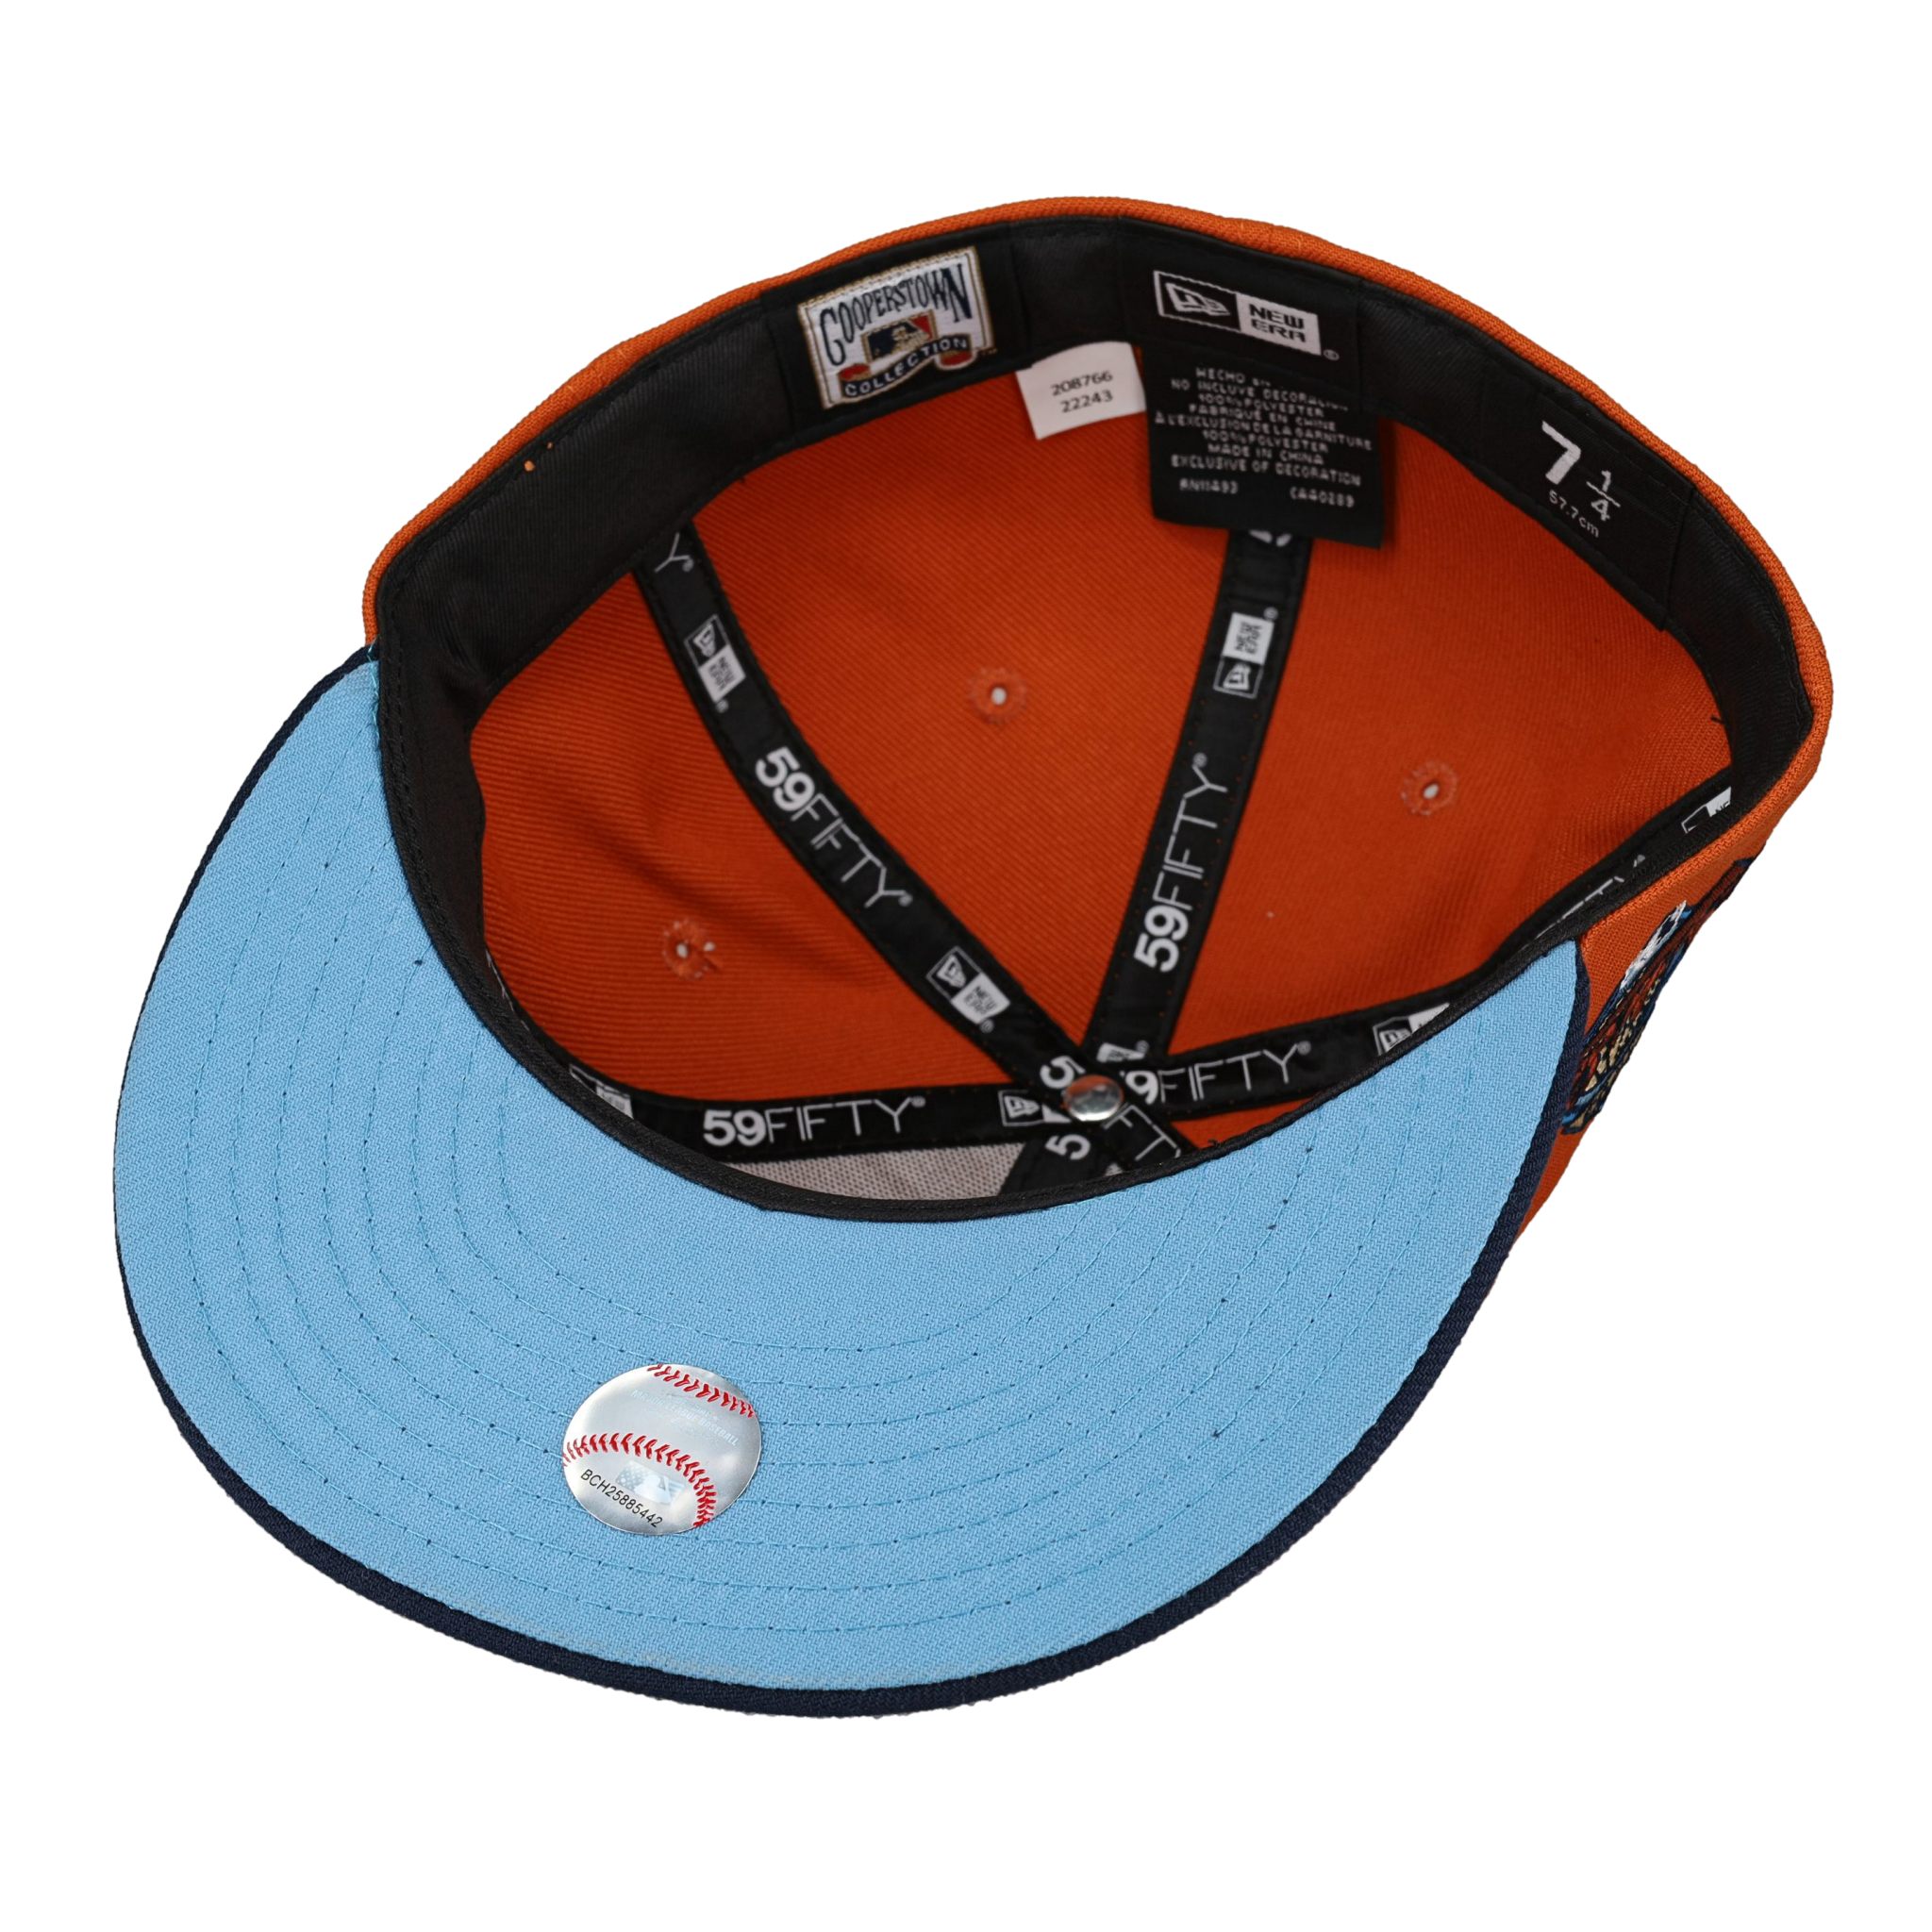 Texas Rangers New Era 5950 League Basic Fitted Hat - Black/White